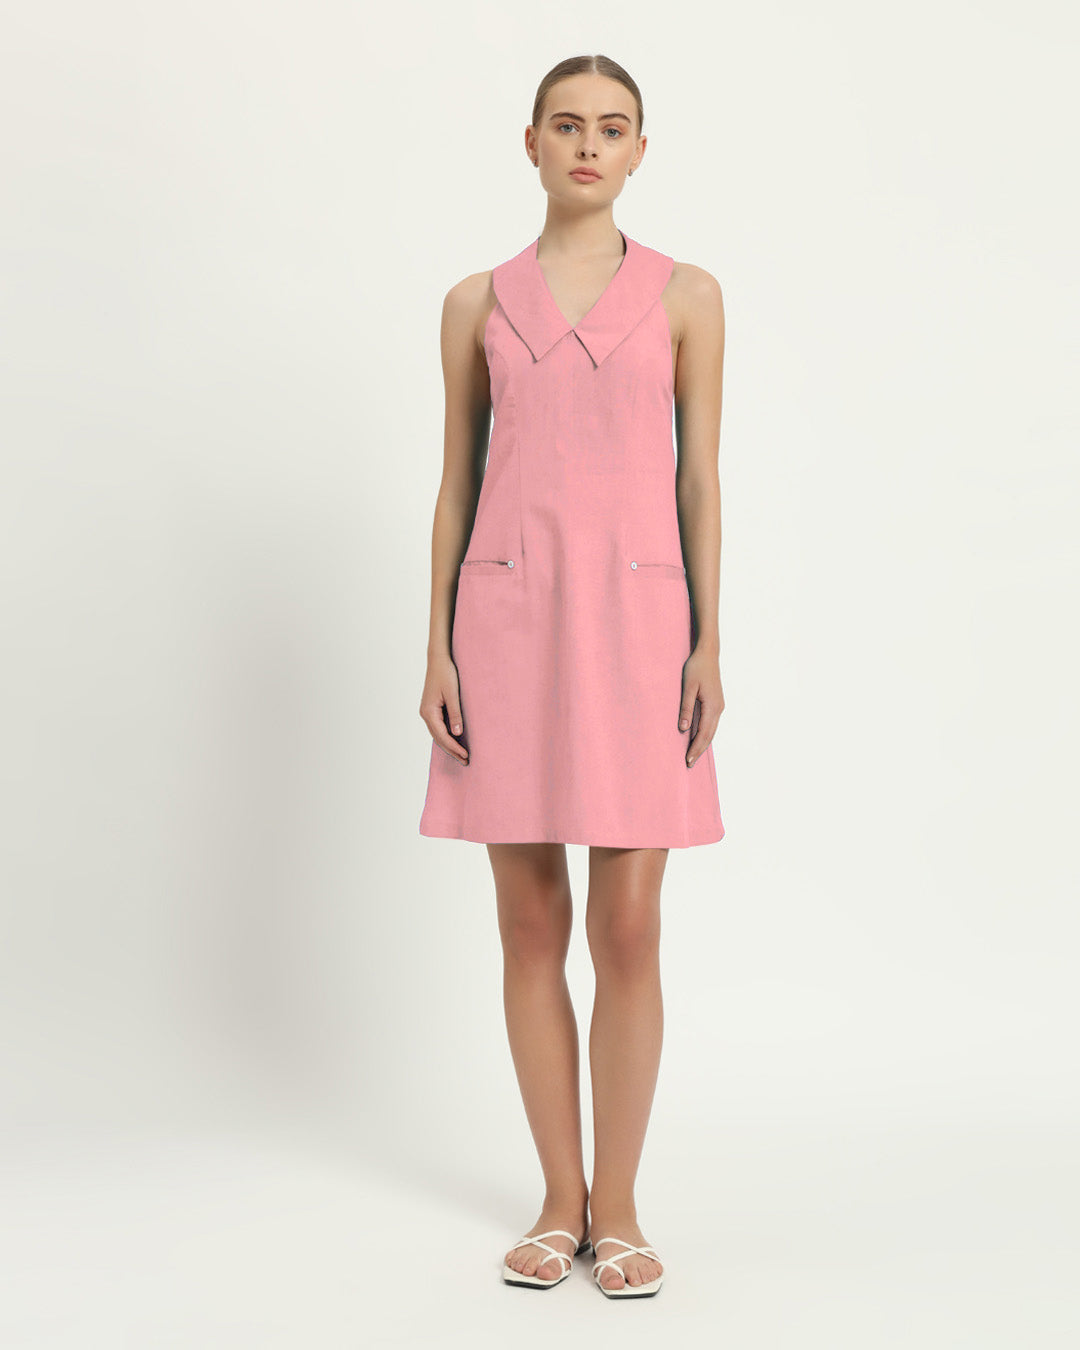 The Olfen Fondant Pink Cotton Dress